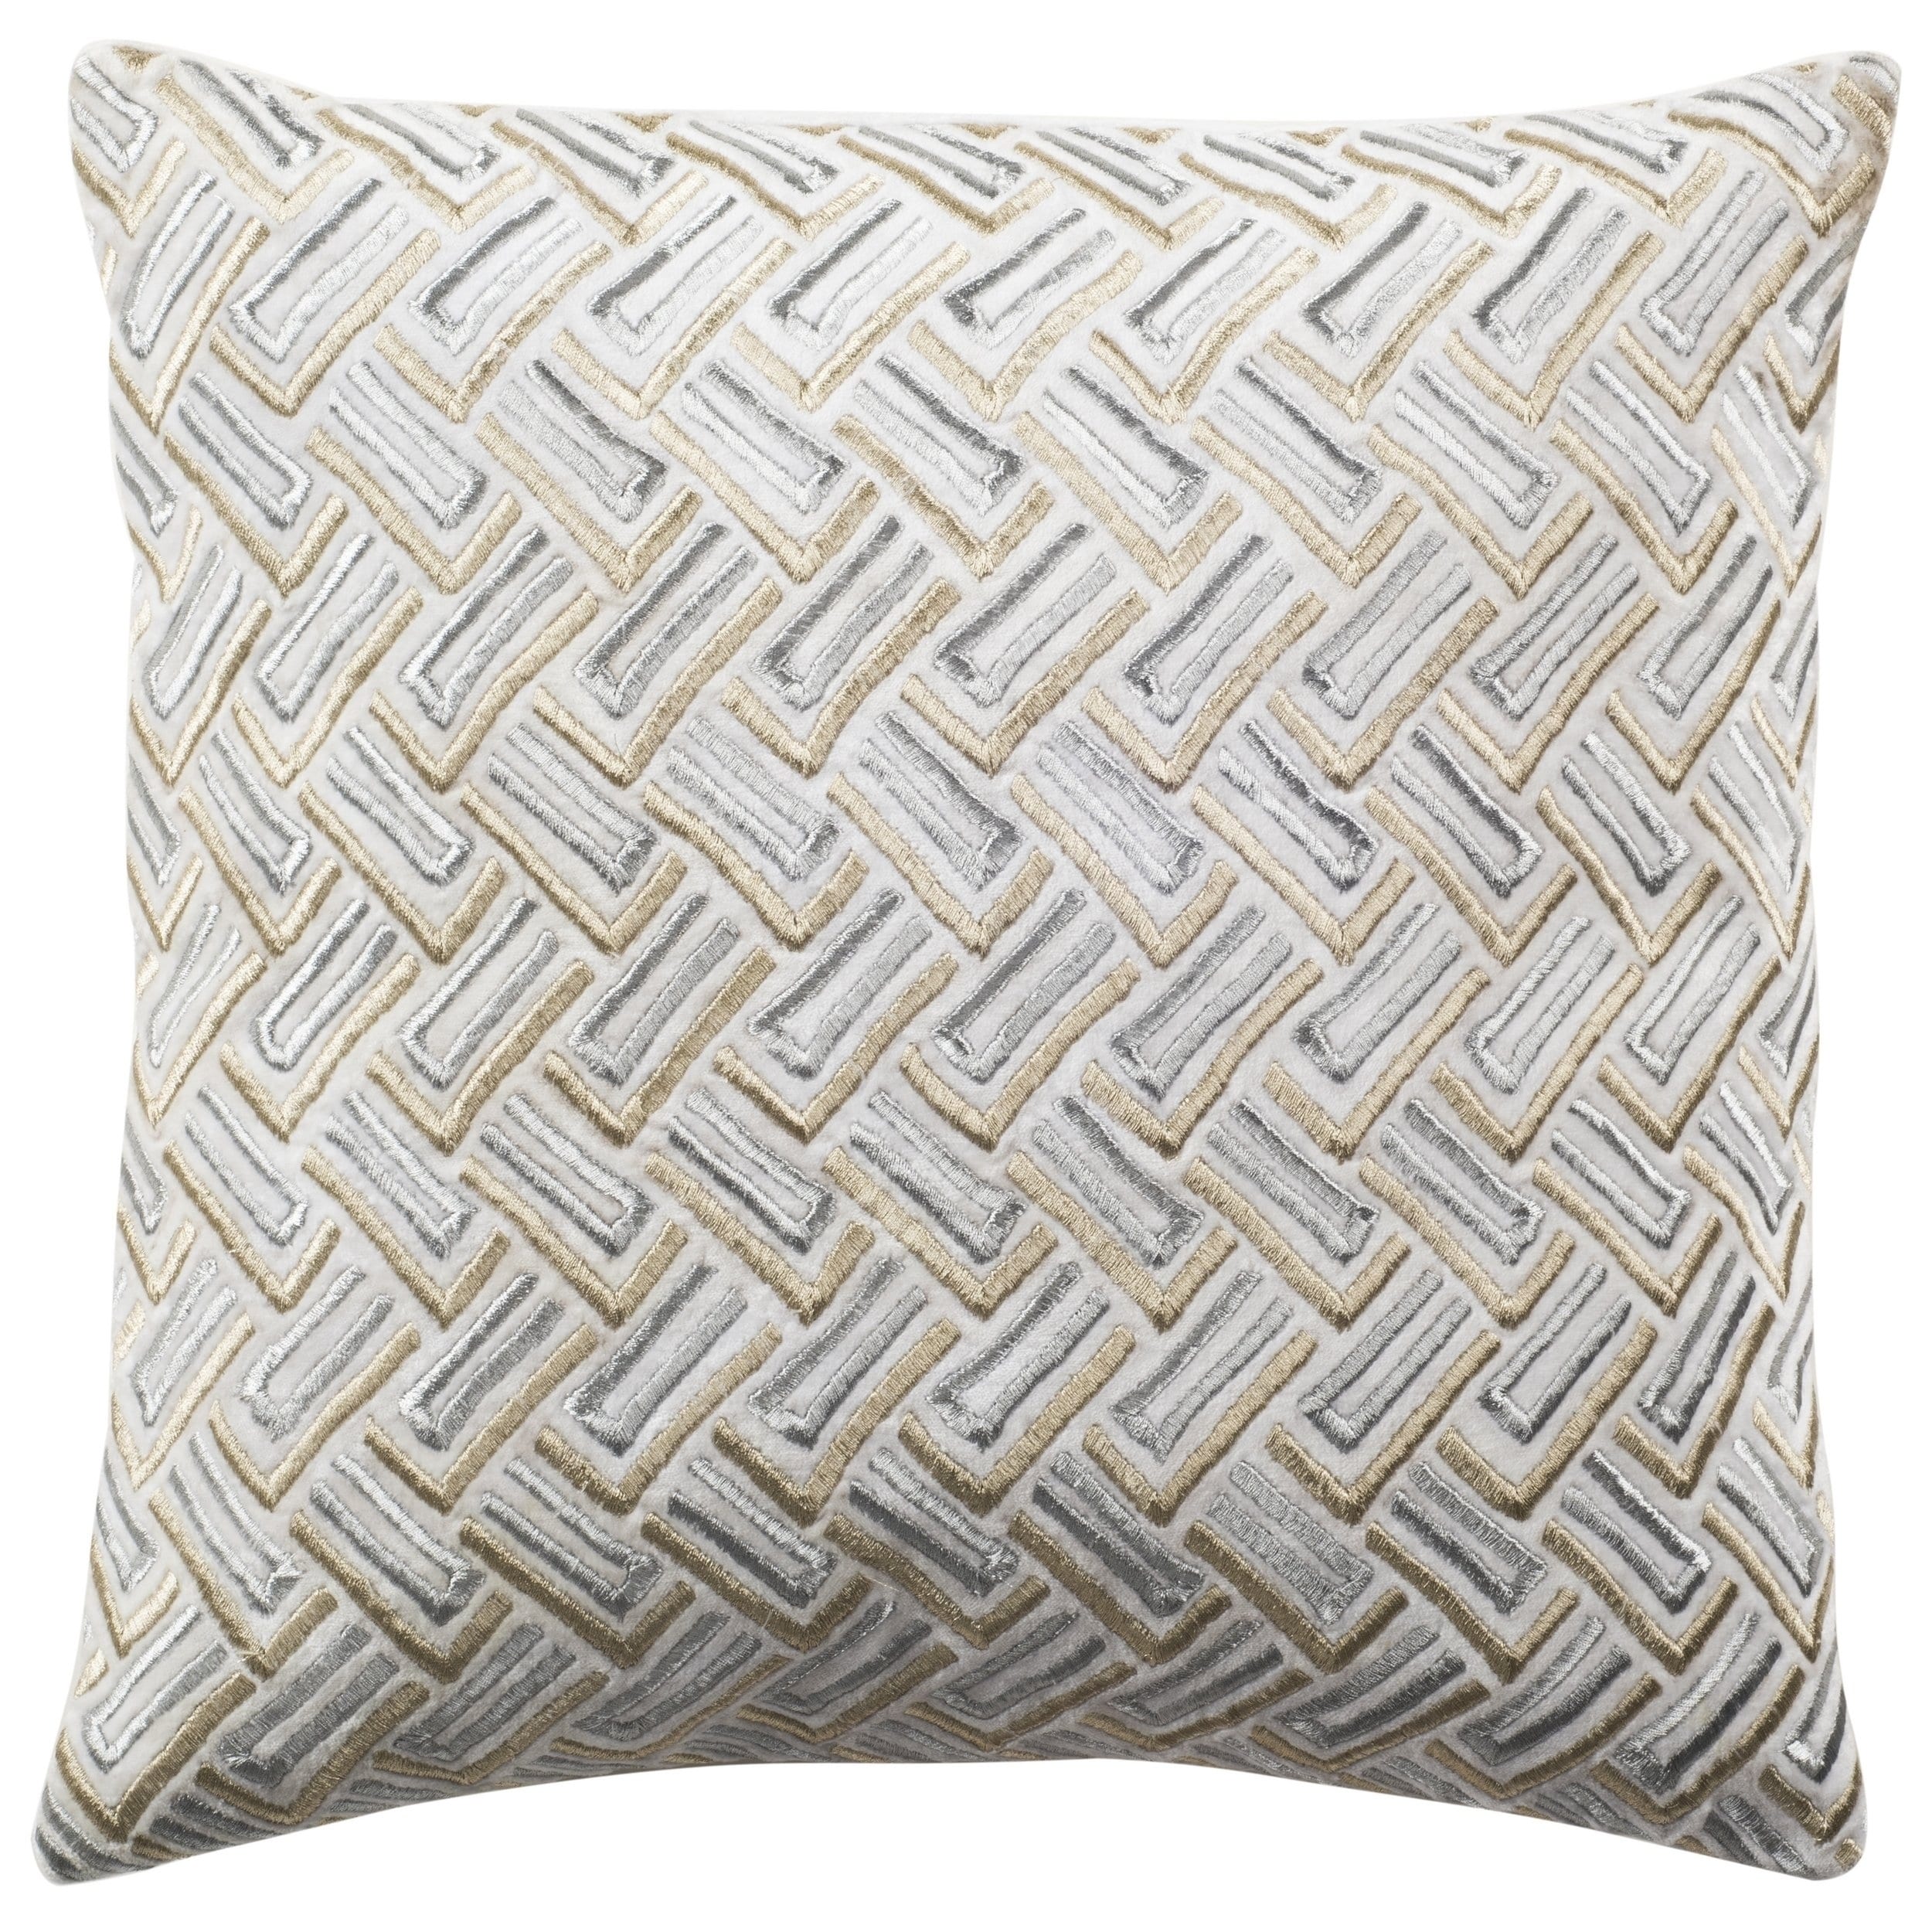 Safavieh 20 Inch Metallic Grey White Gold Decorative Pillow